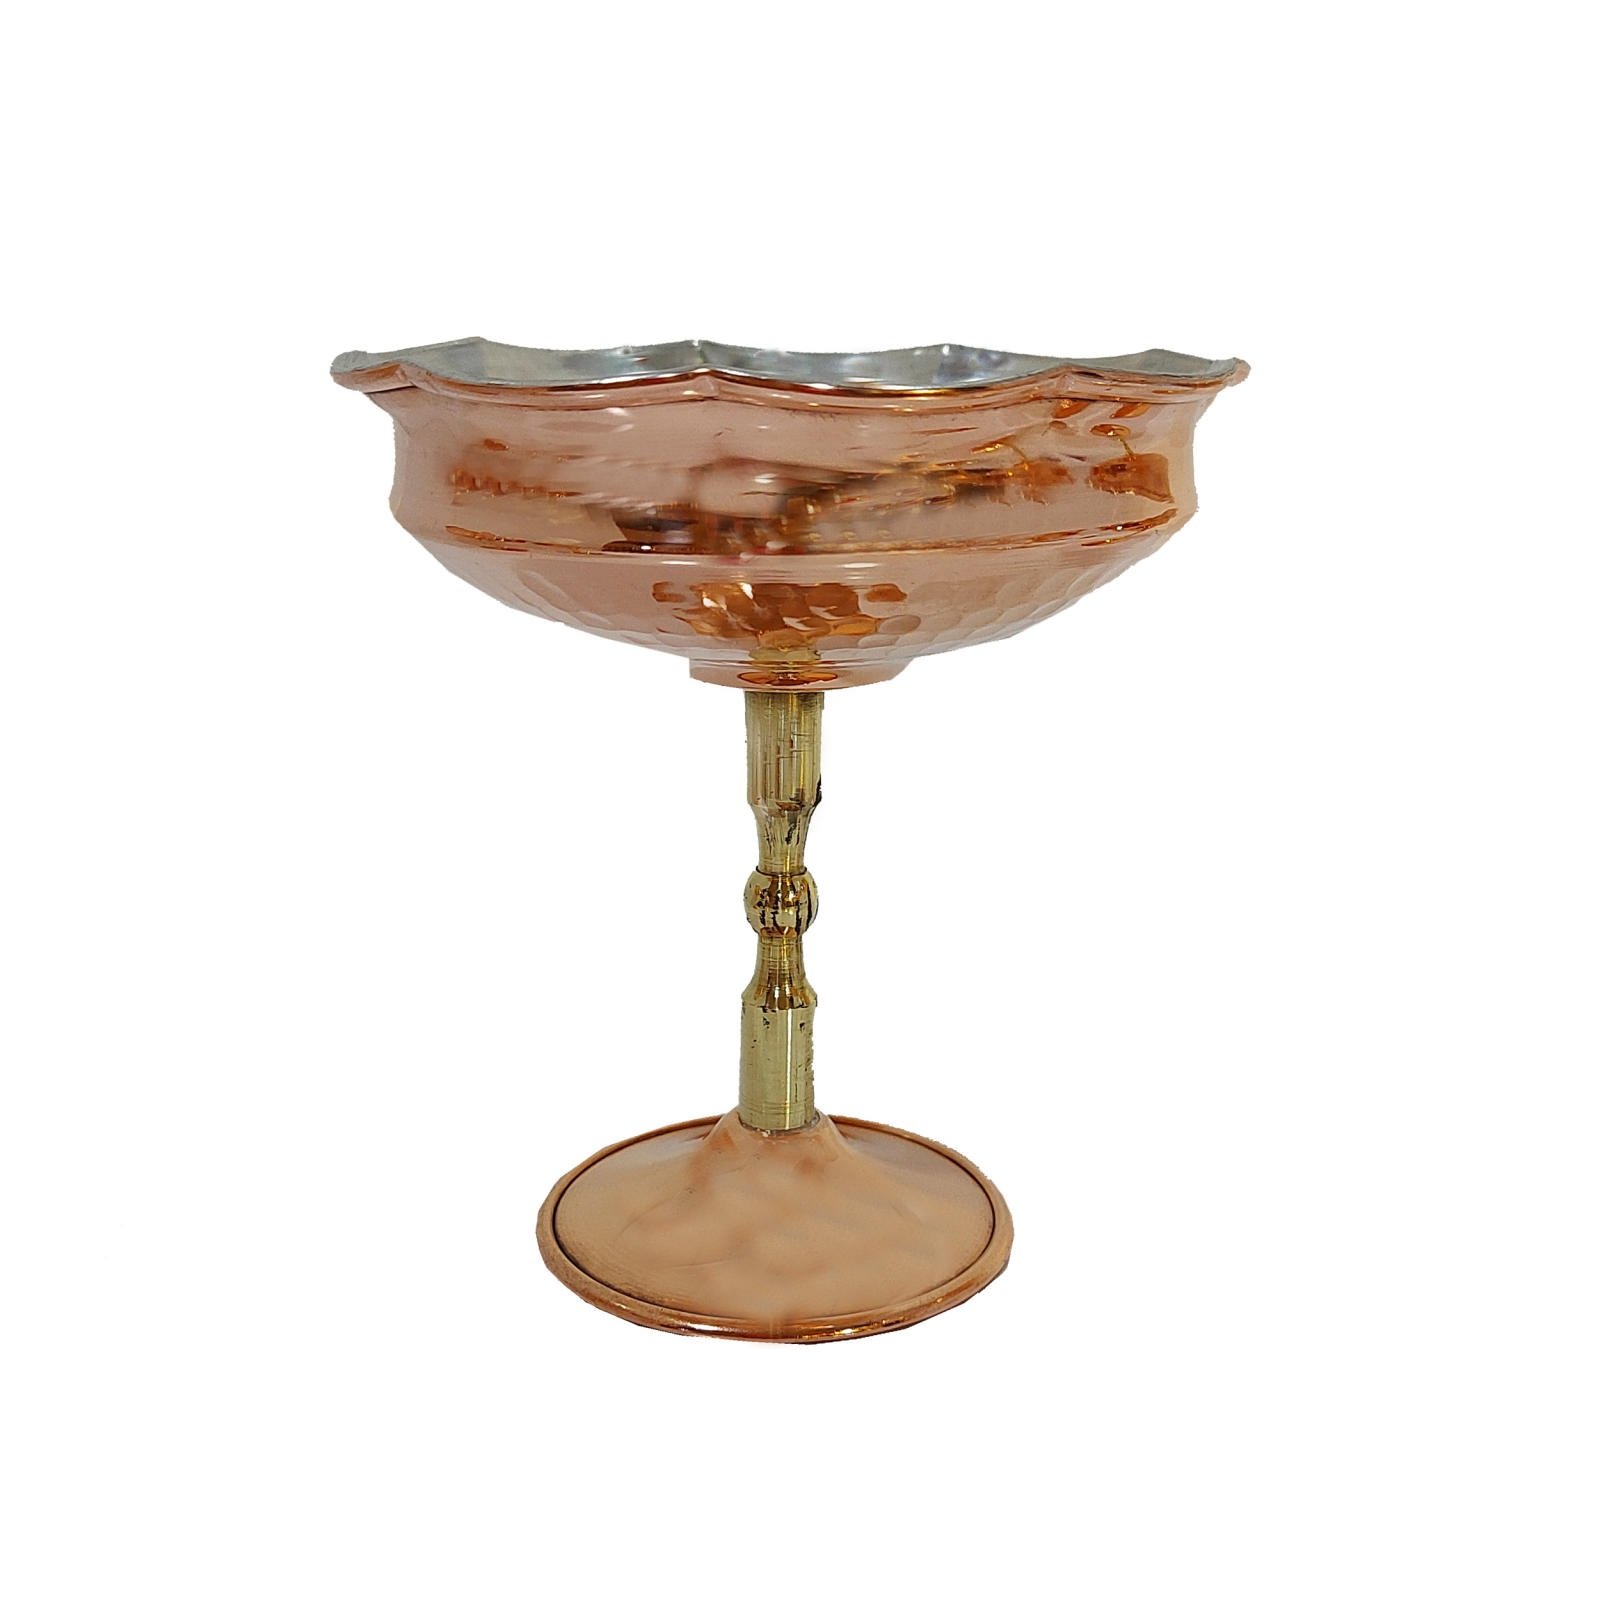 Handicraft Copper bowl Hammer model code 55555 Set 6 pcs,Preis Kupfer,Preis Kupfergeschirr